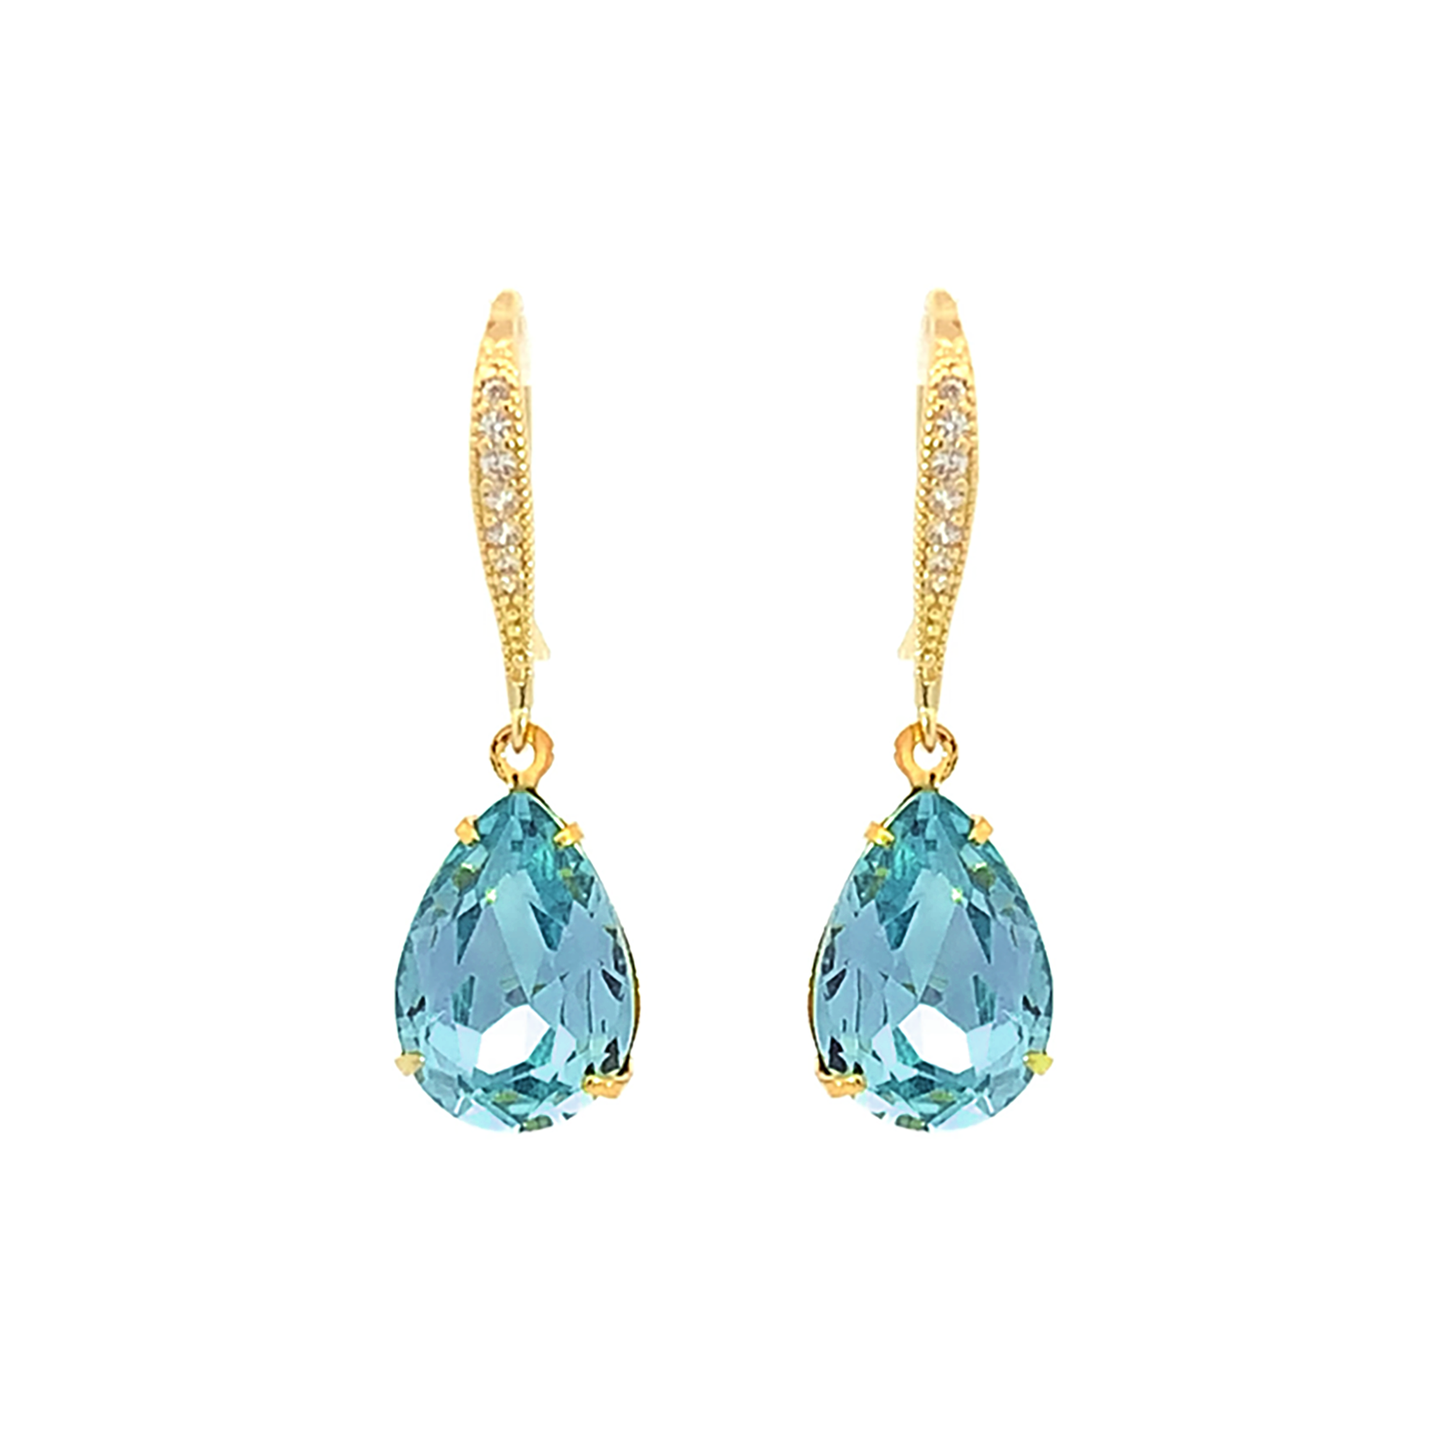 Aquamarine crystal teardrop earrings gold